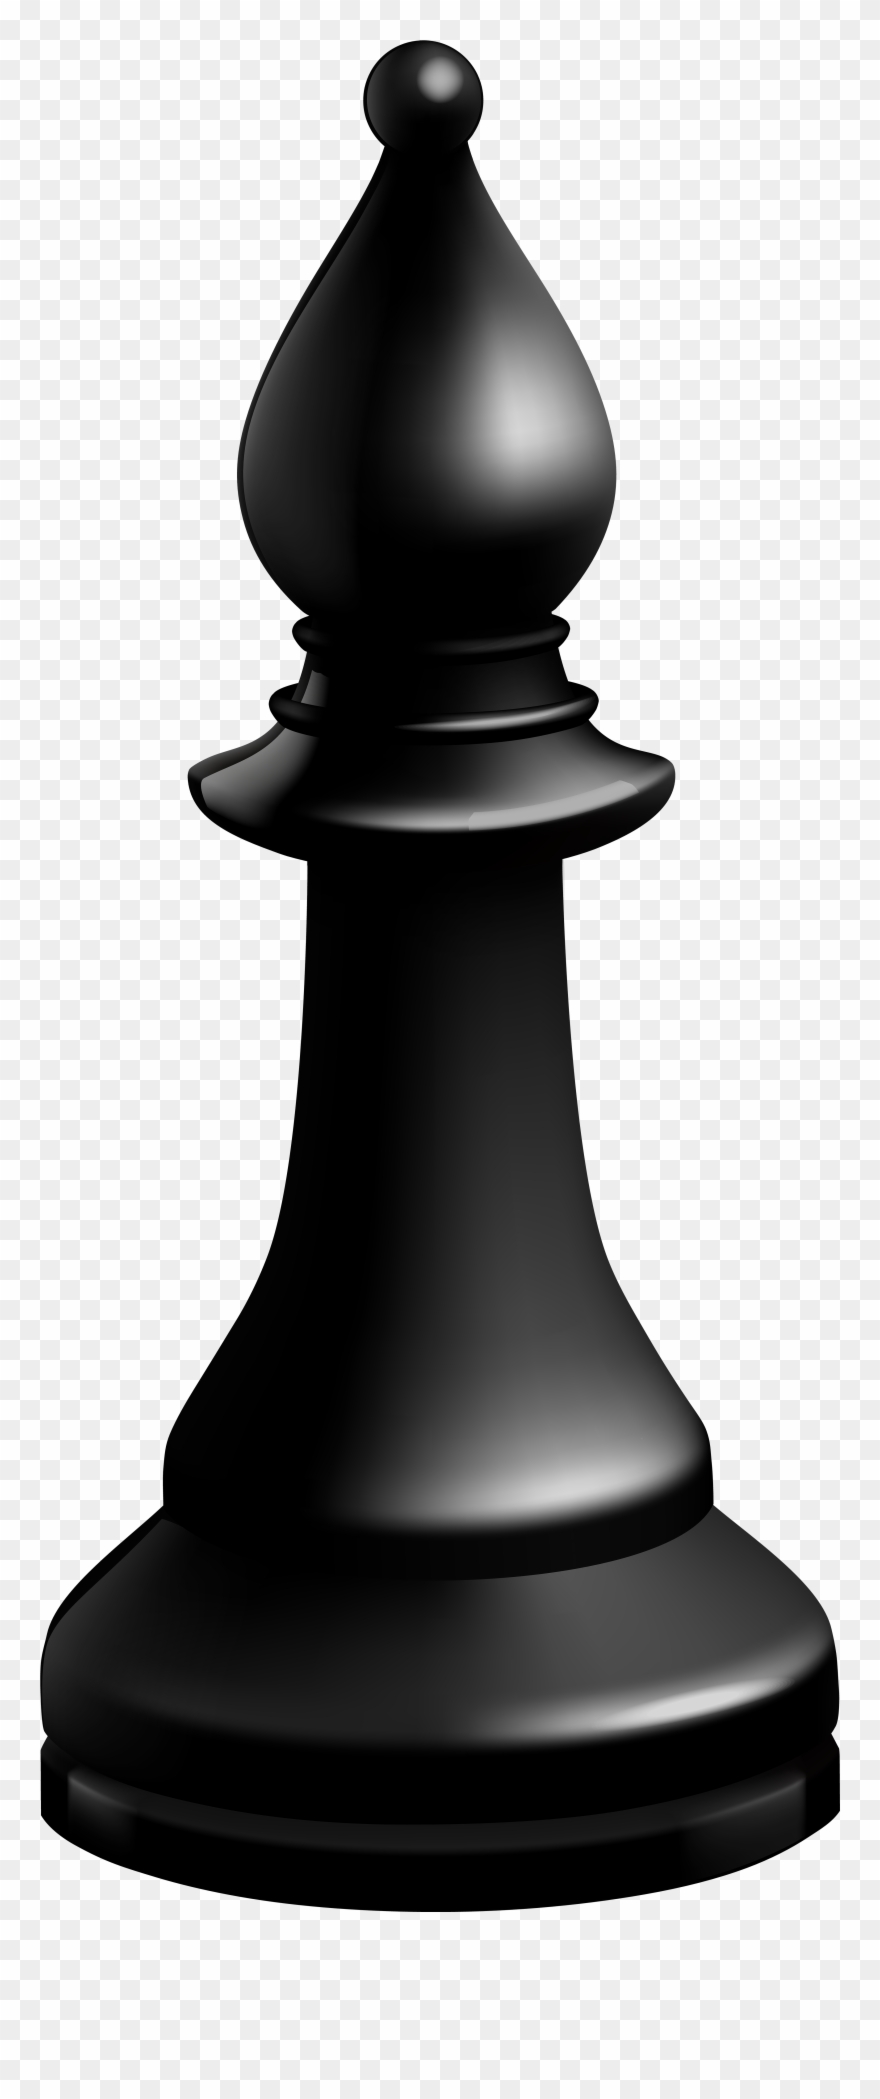 Bishop Black Chess Piece Png Clip Art